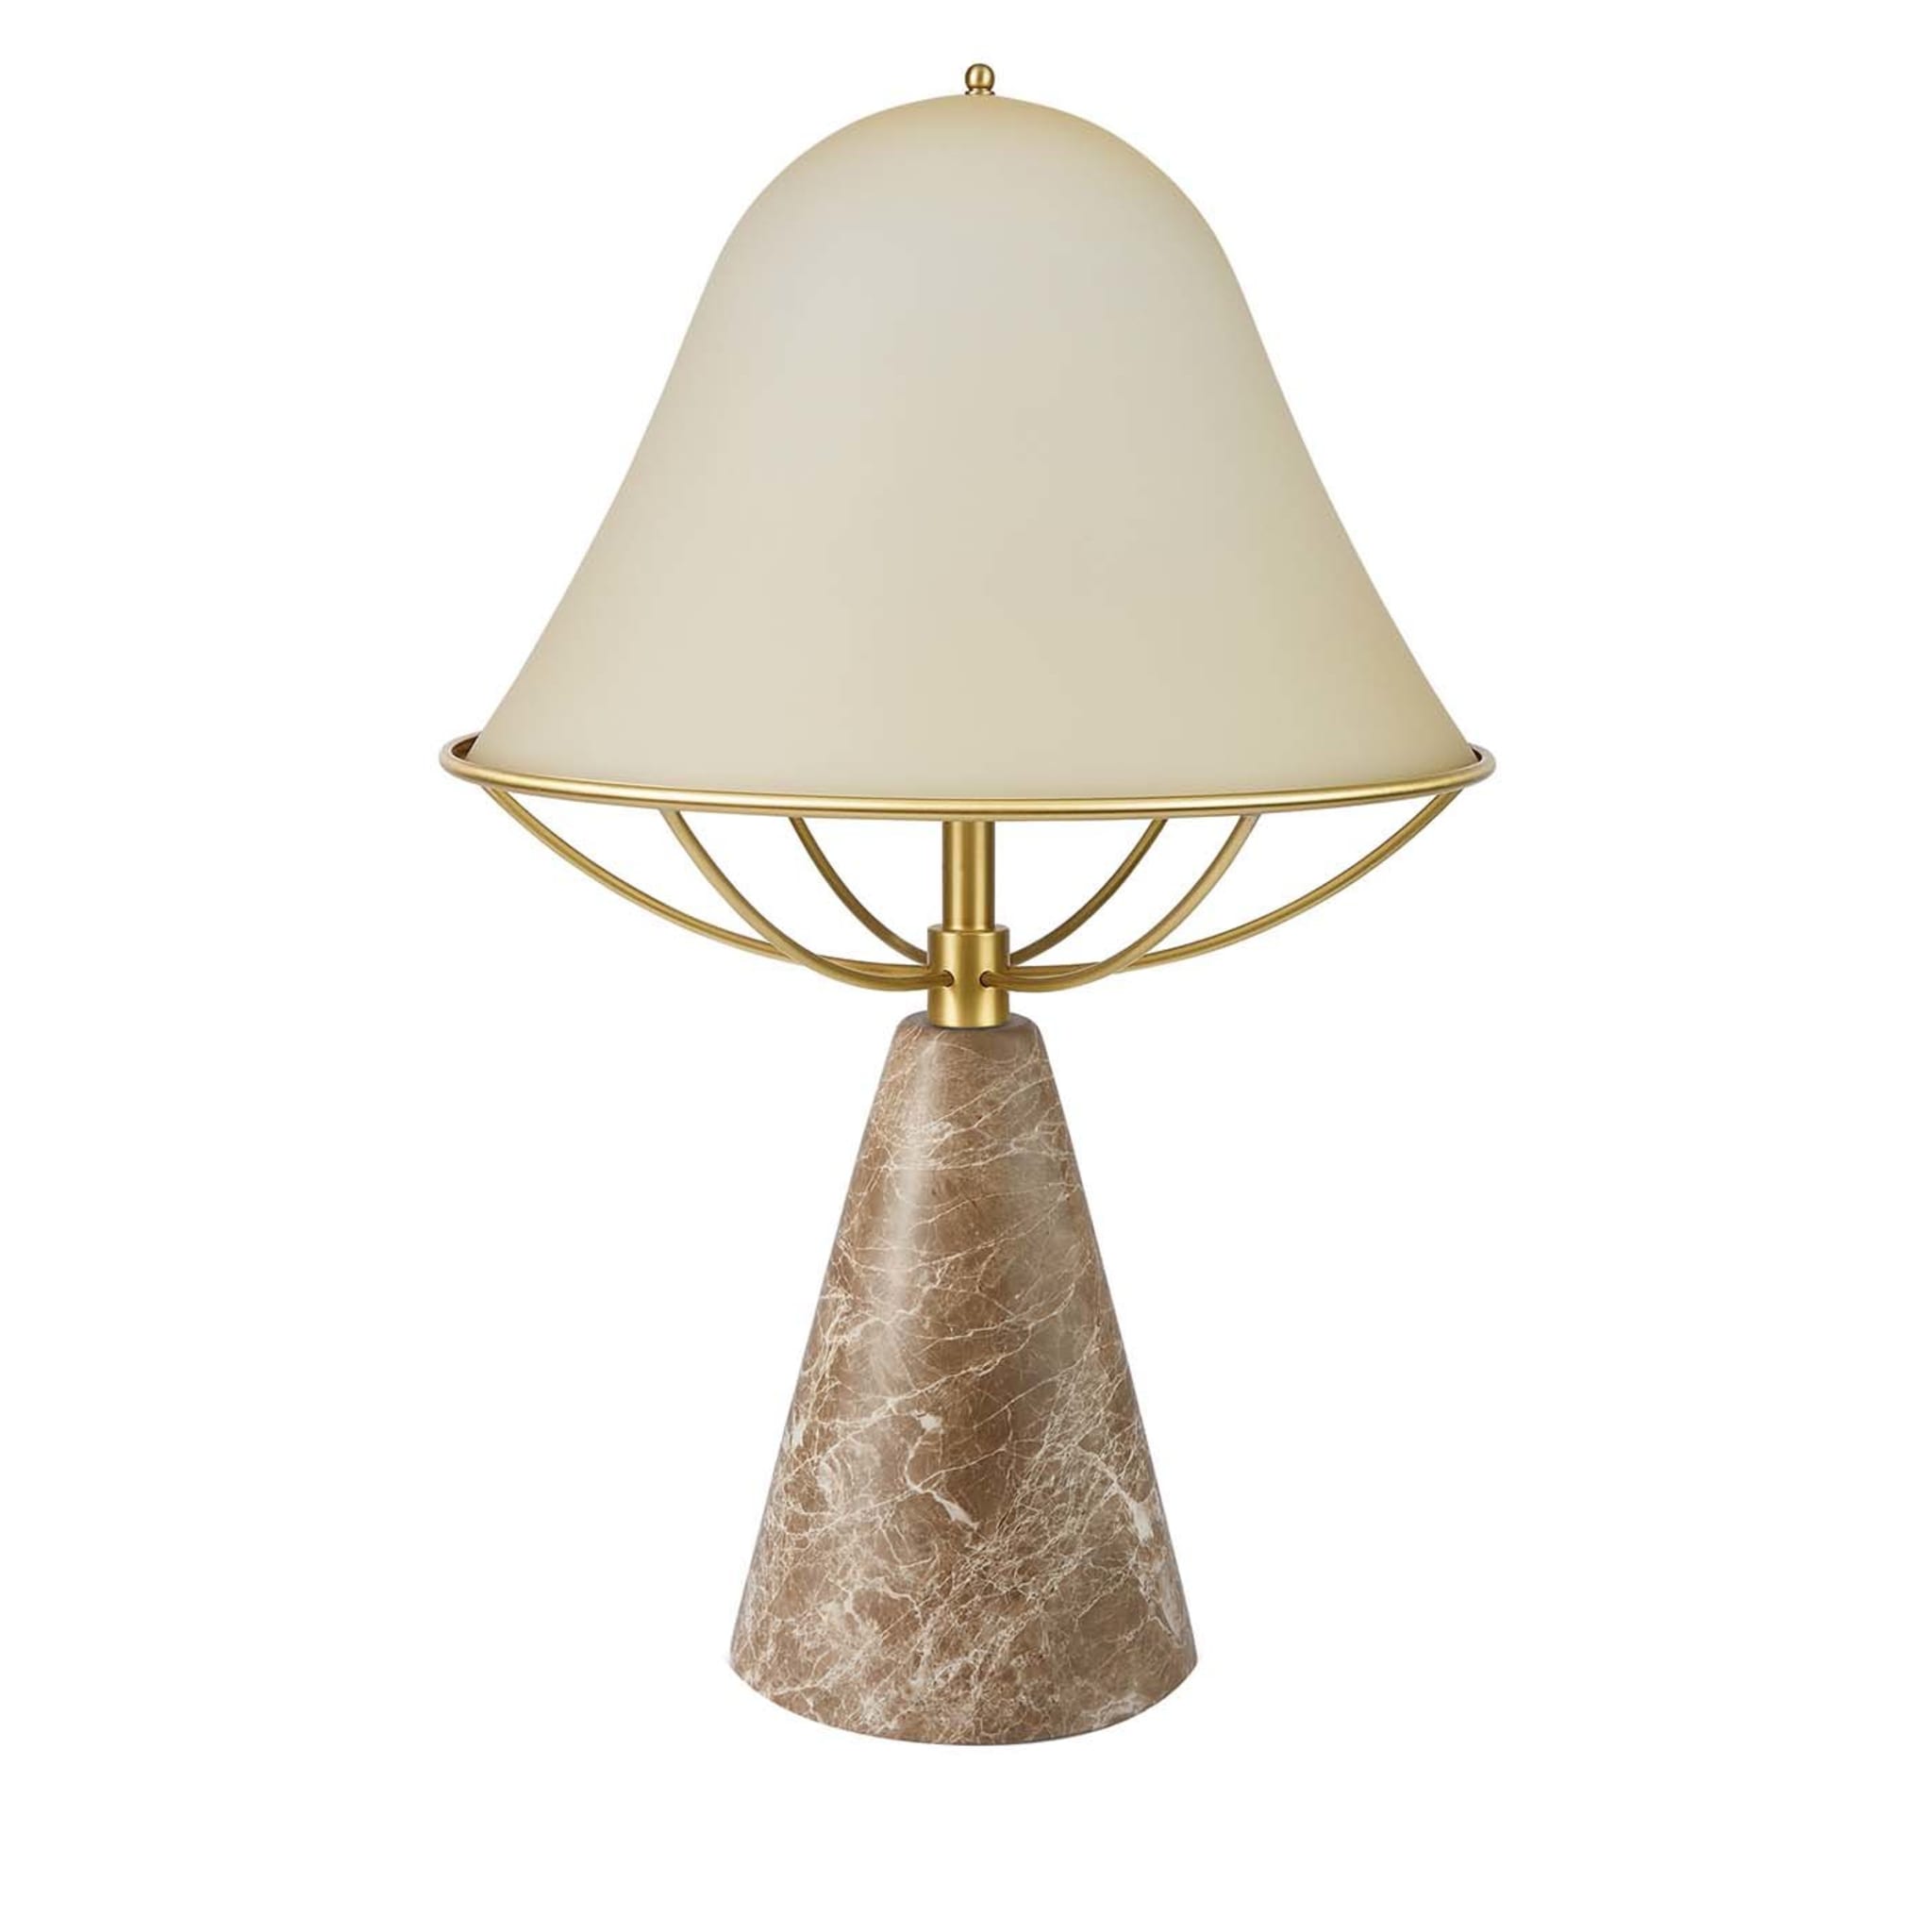 Anita Table Lamp in Emperador Marble by Lorenza Bozzoli - Main view